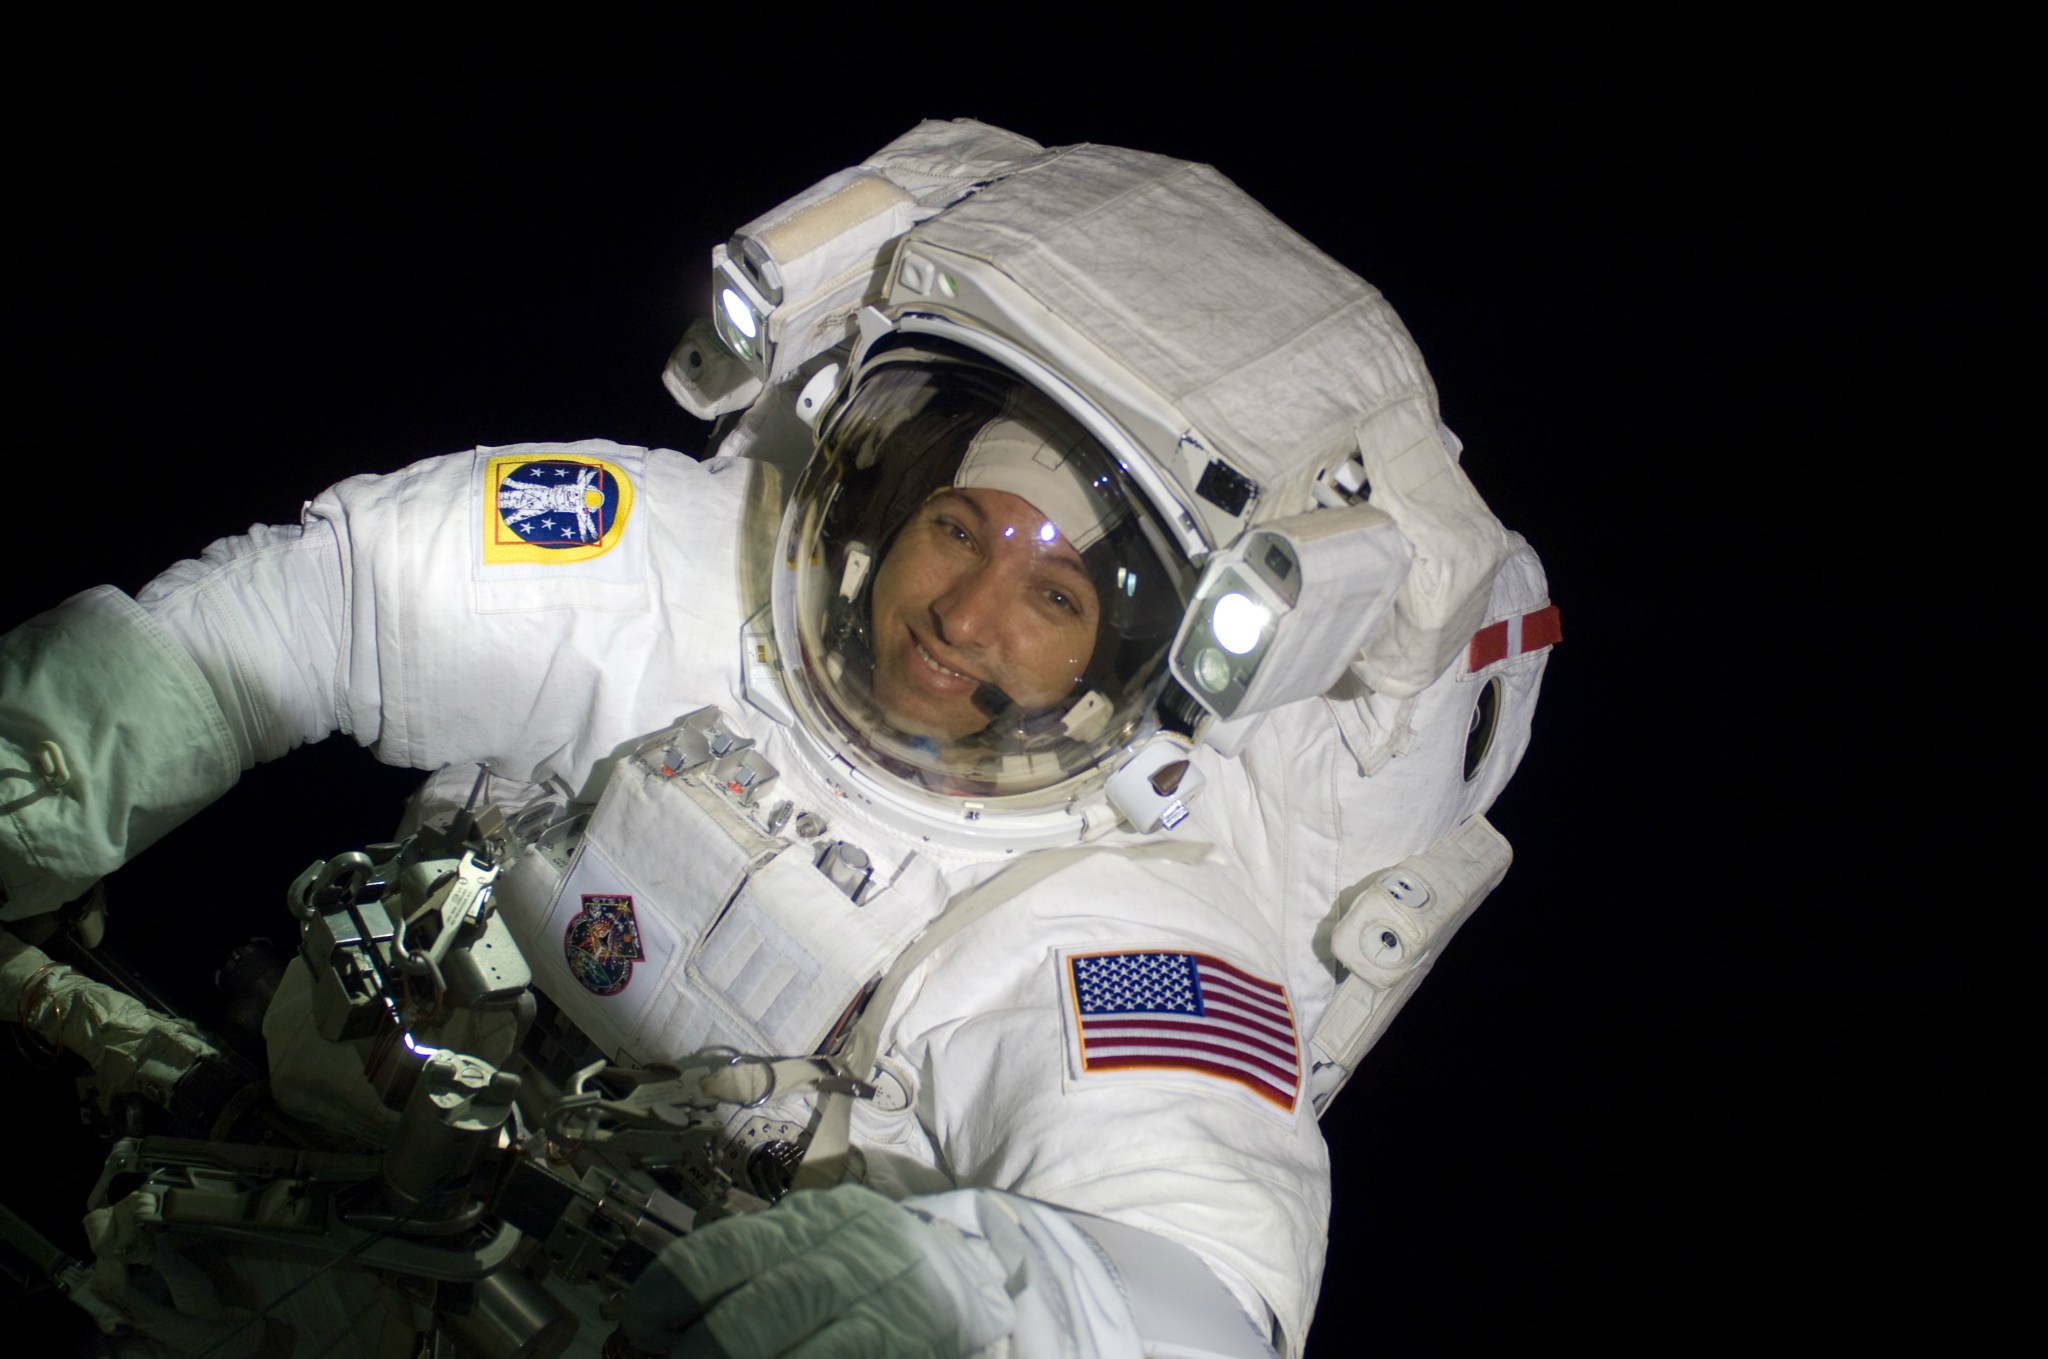 NASA astronaut Randy Bresnik, STS-129 mission specialist